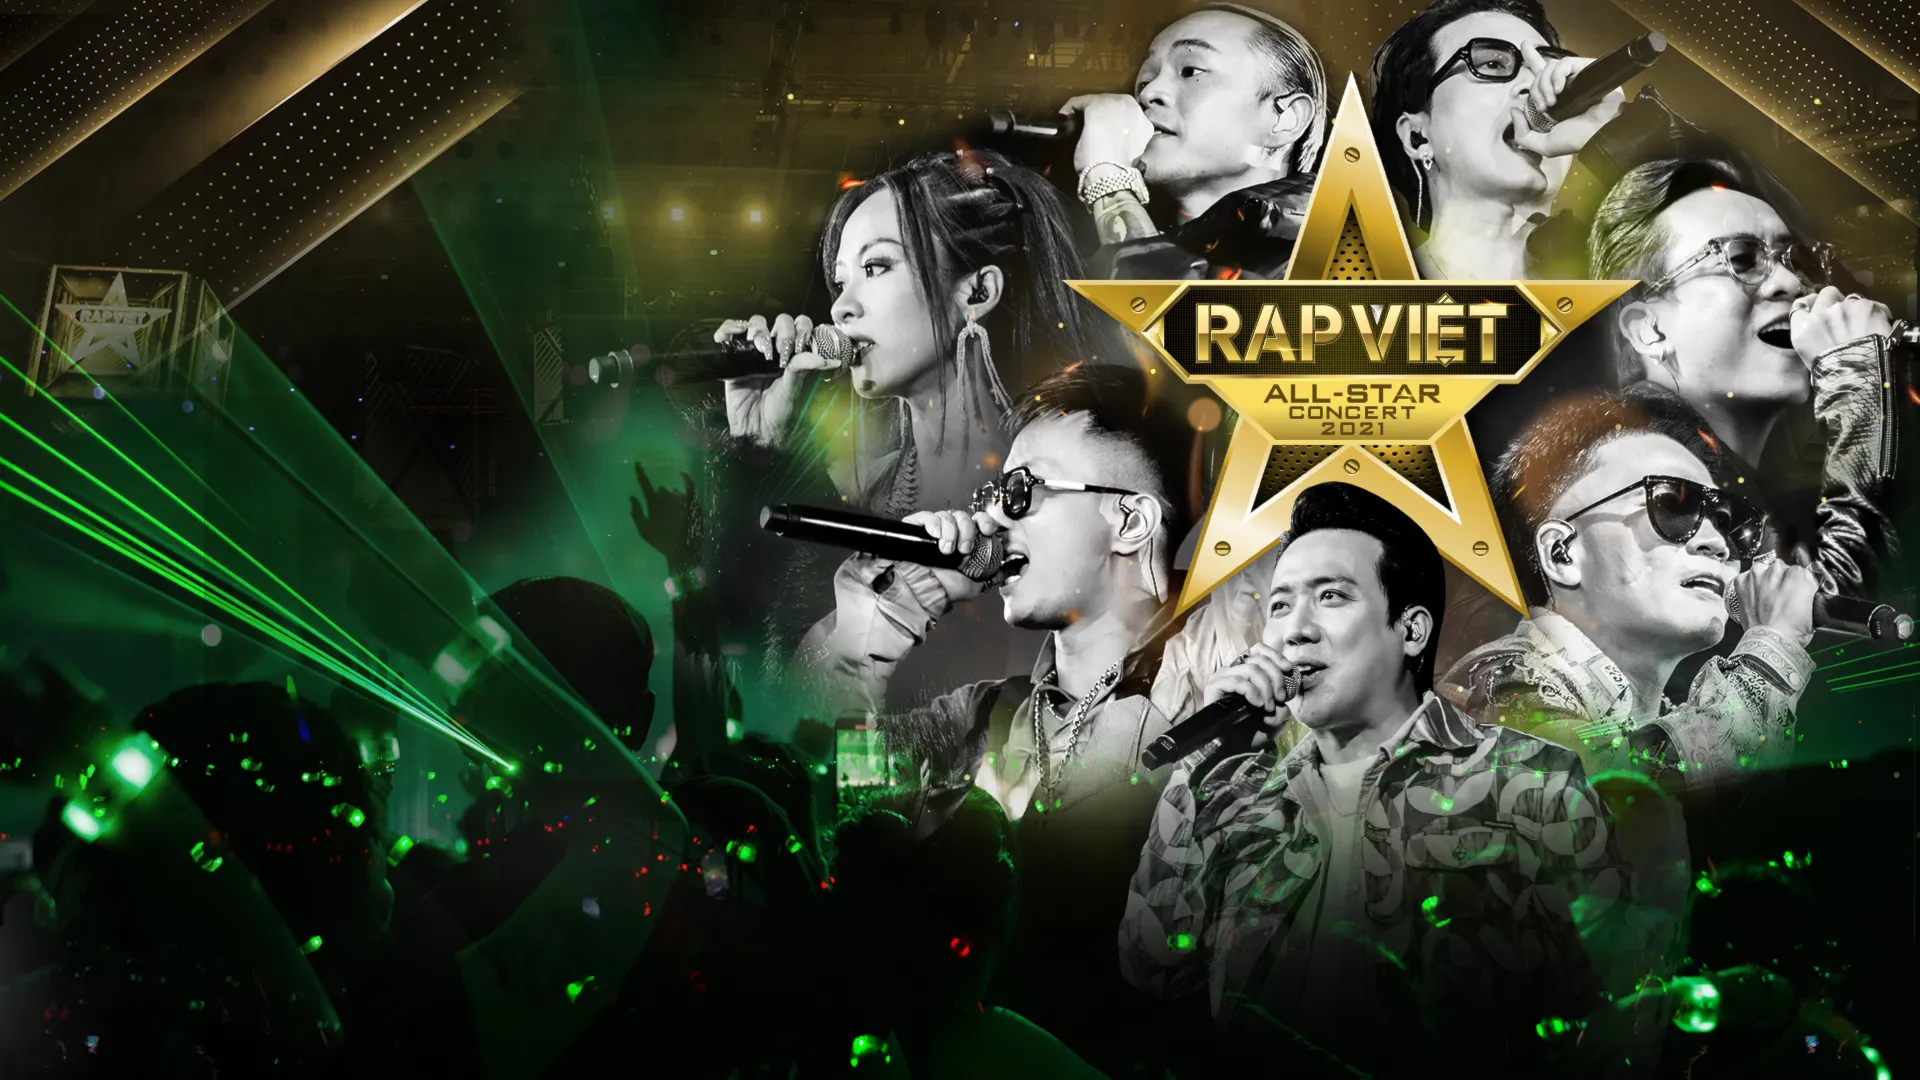 Rap Việt All Star Concert